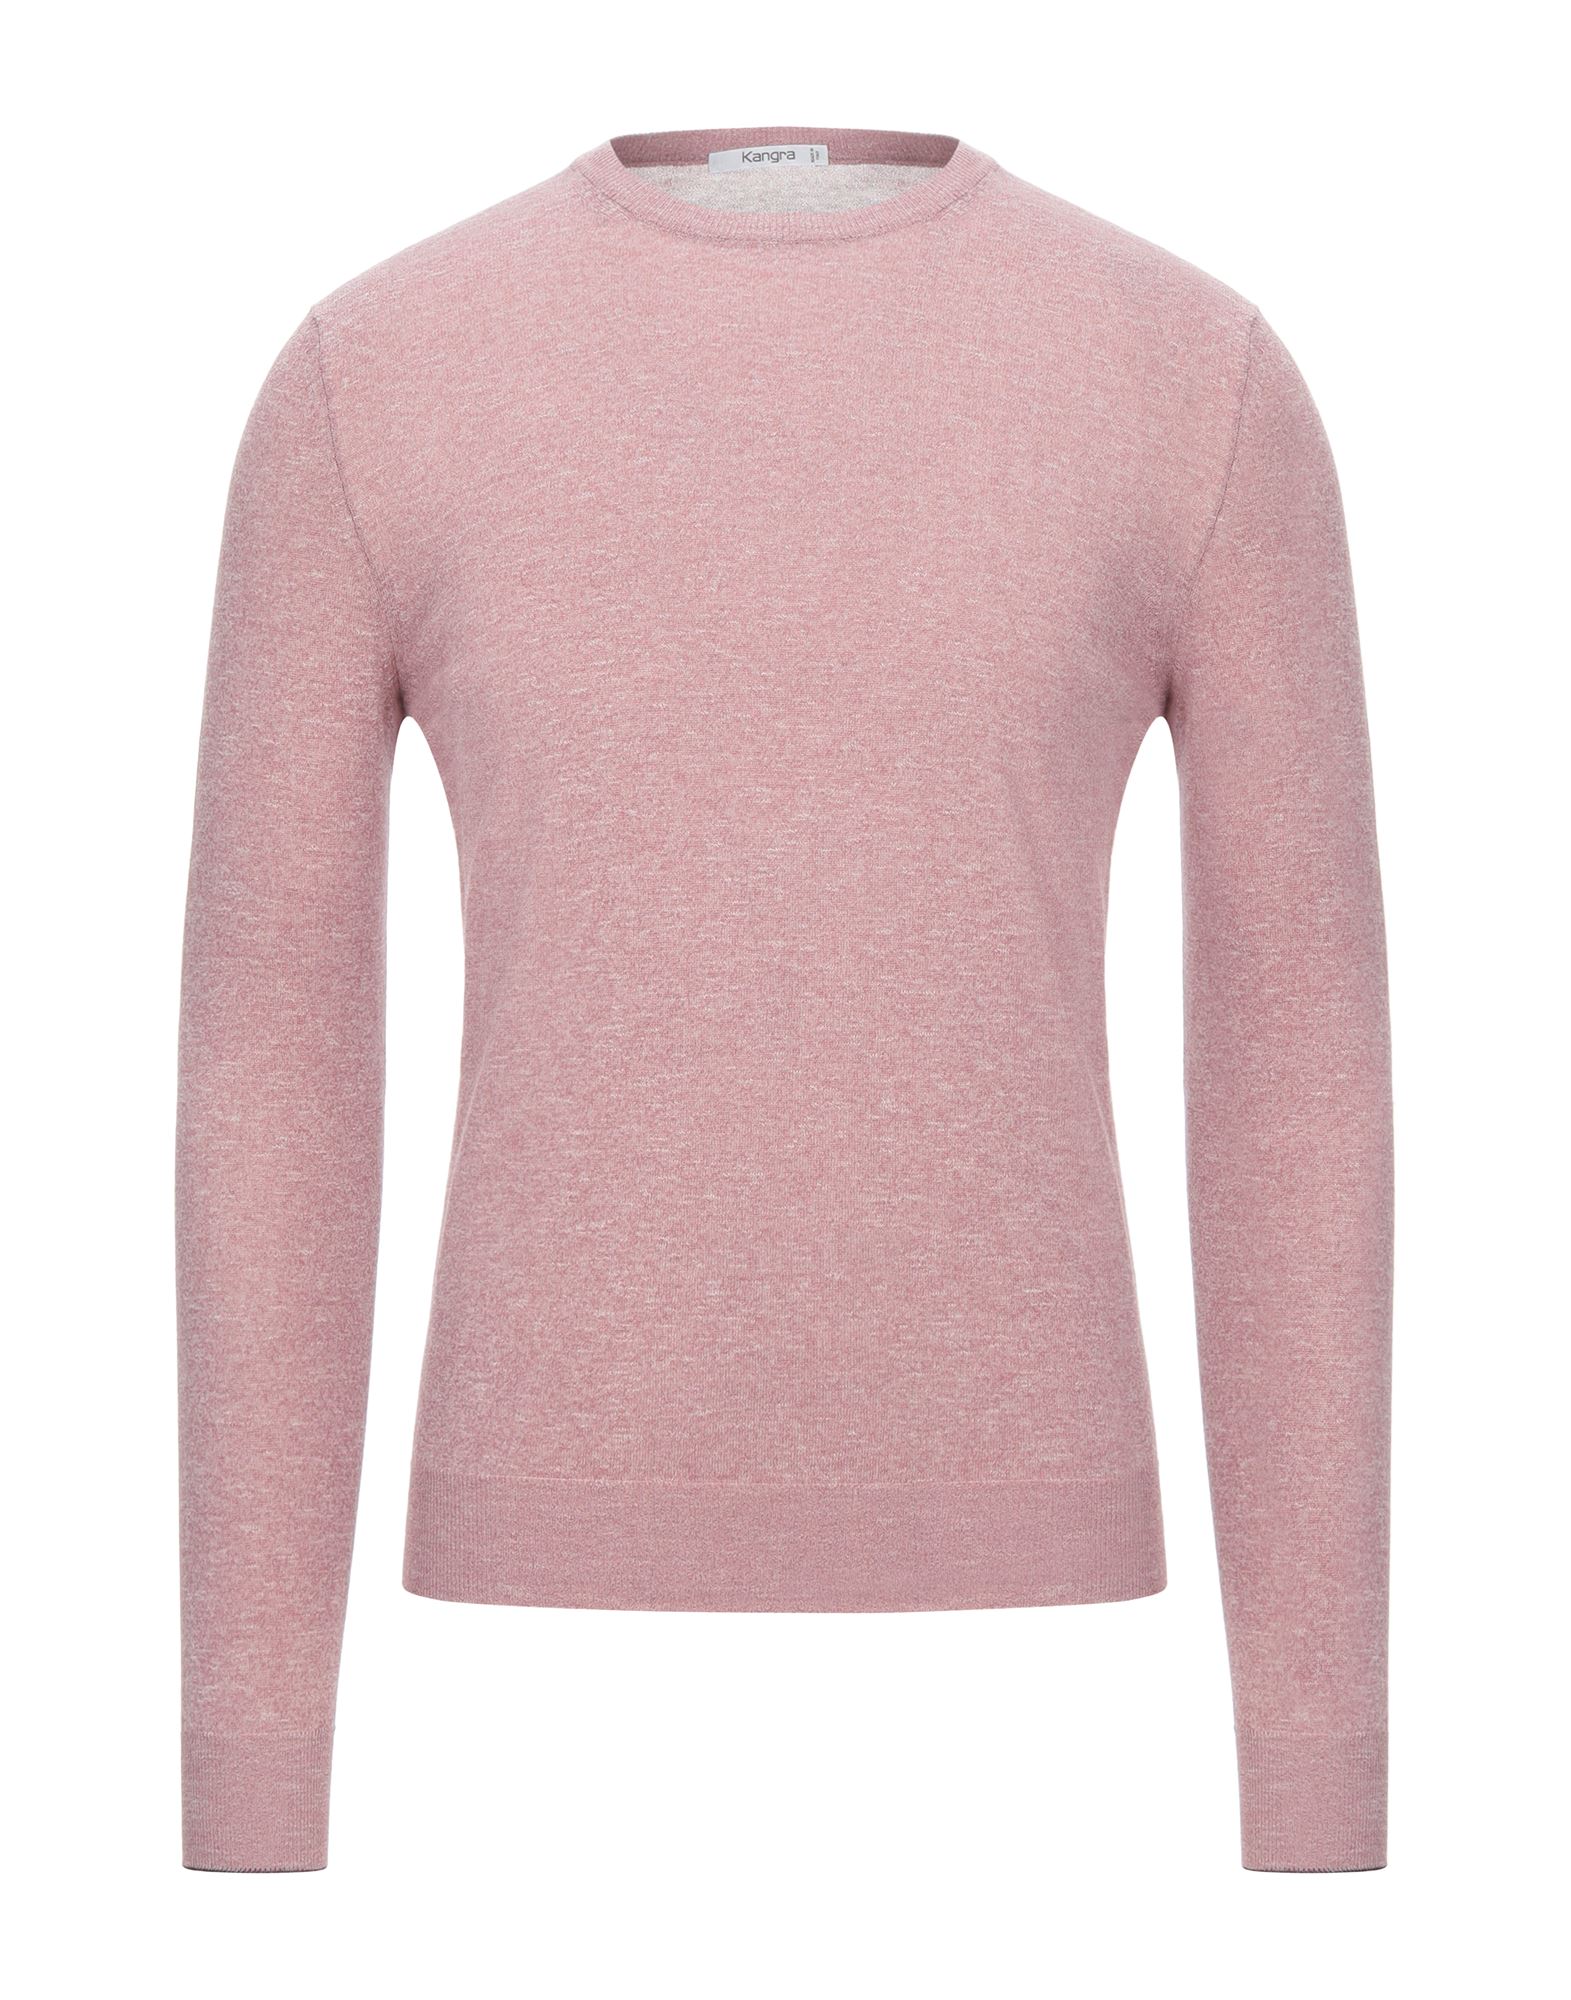 KANGRA CASHMERE Sweaters - Item 14103543